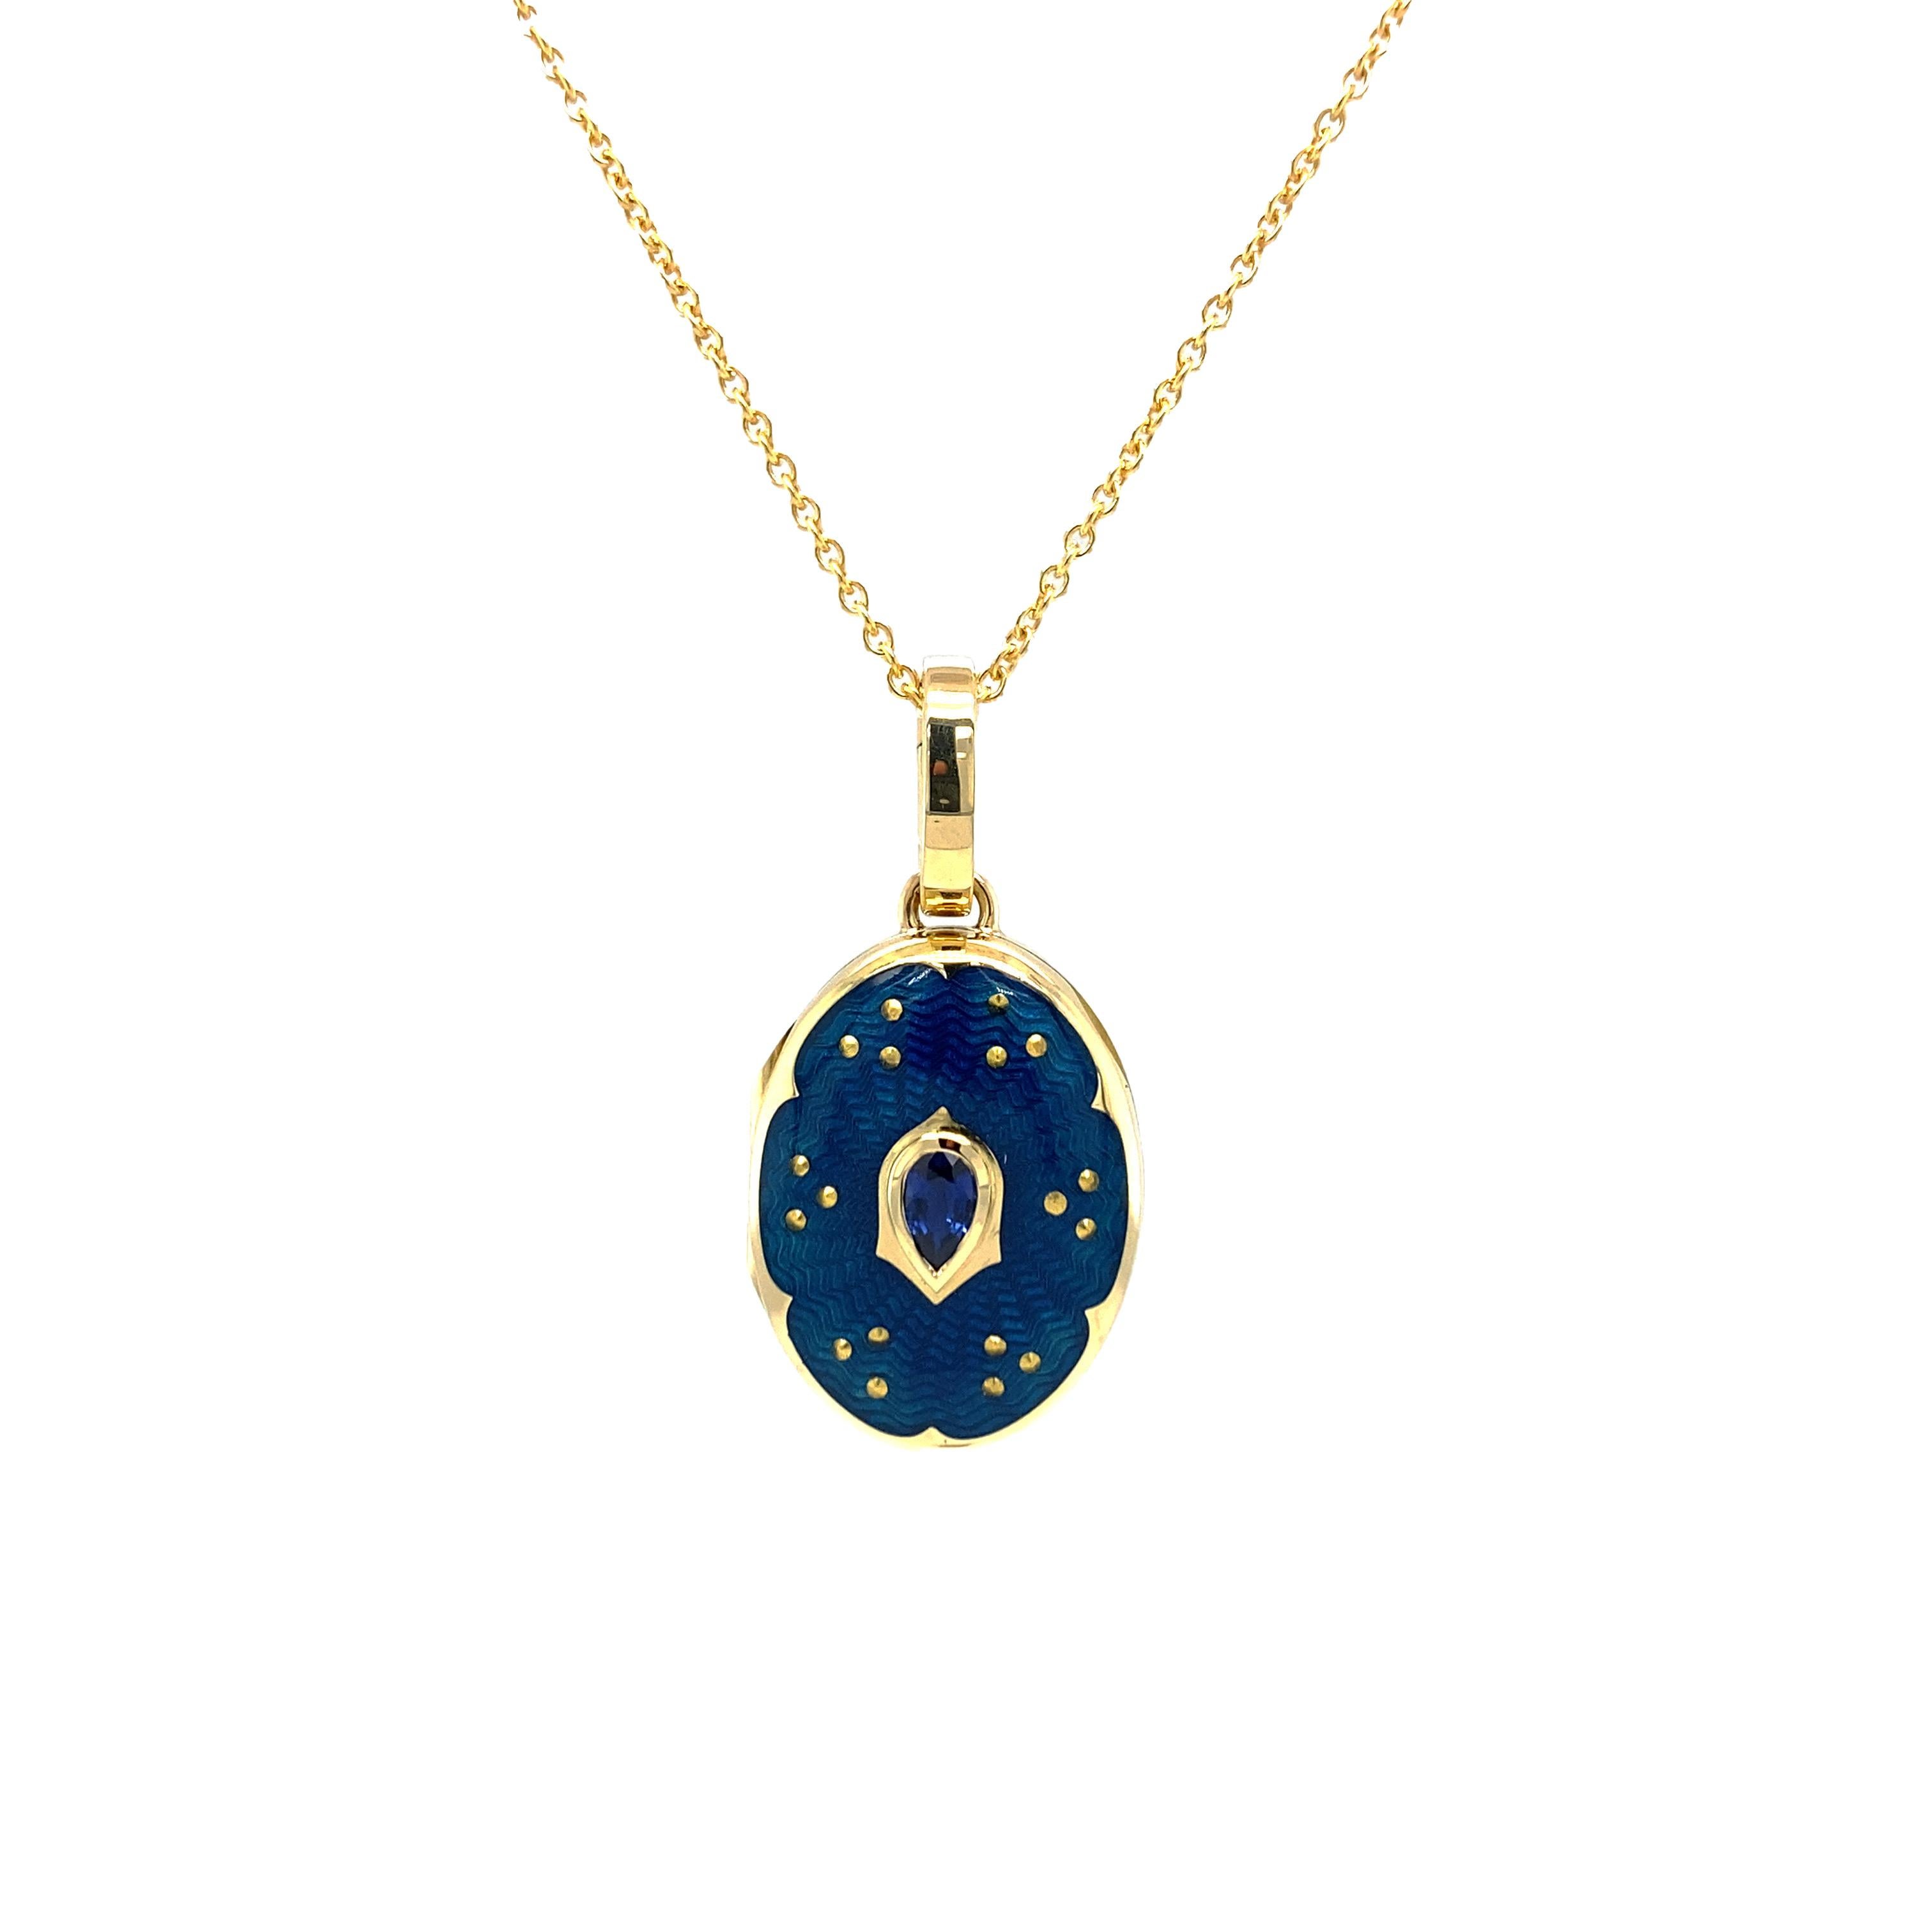  Oval Locket Pendant Necklace - 18k Yellow Gold - Blue Enamel - 1 Sapphire In New Condition For Sale In Pforzheim, DE